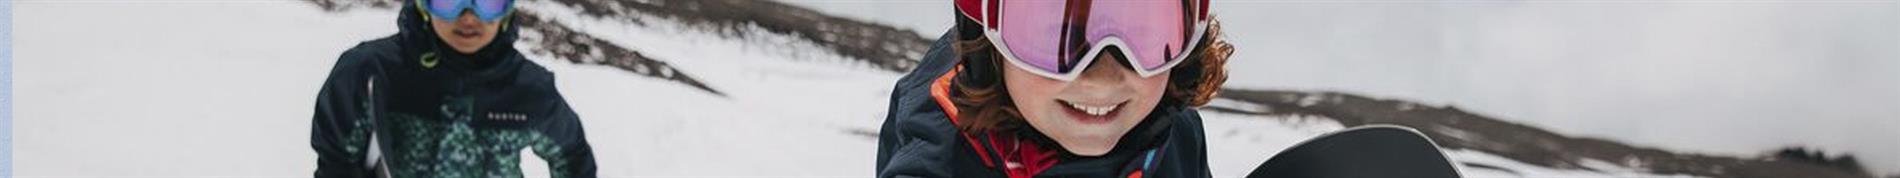 Marmot Kids Ski & Snowboard Clothing (Ages 6-16) 